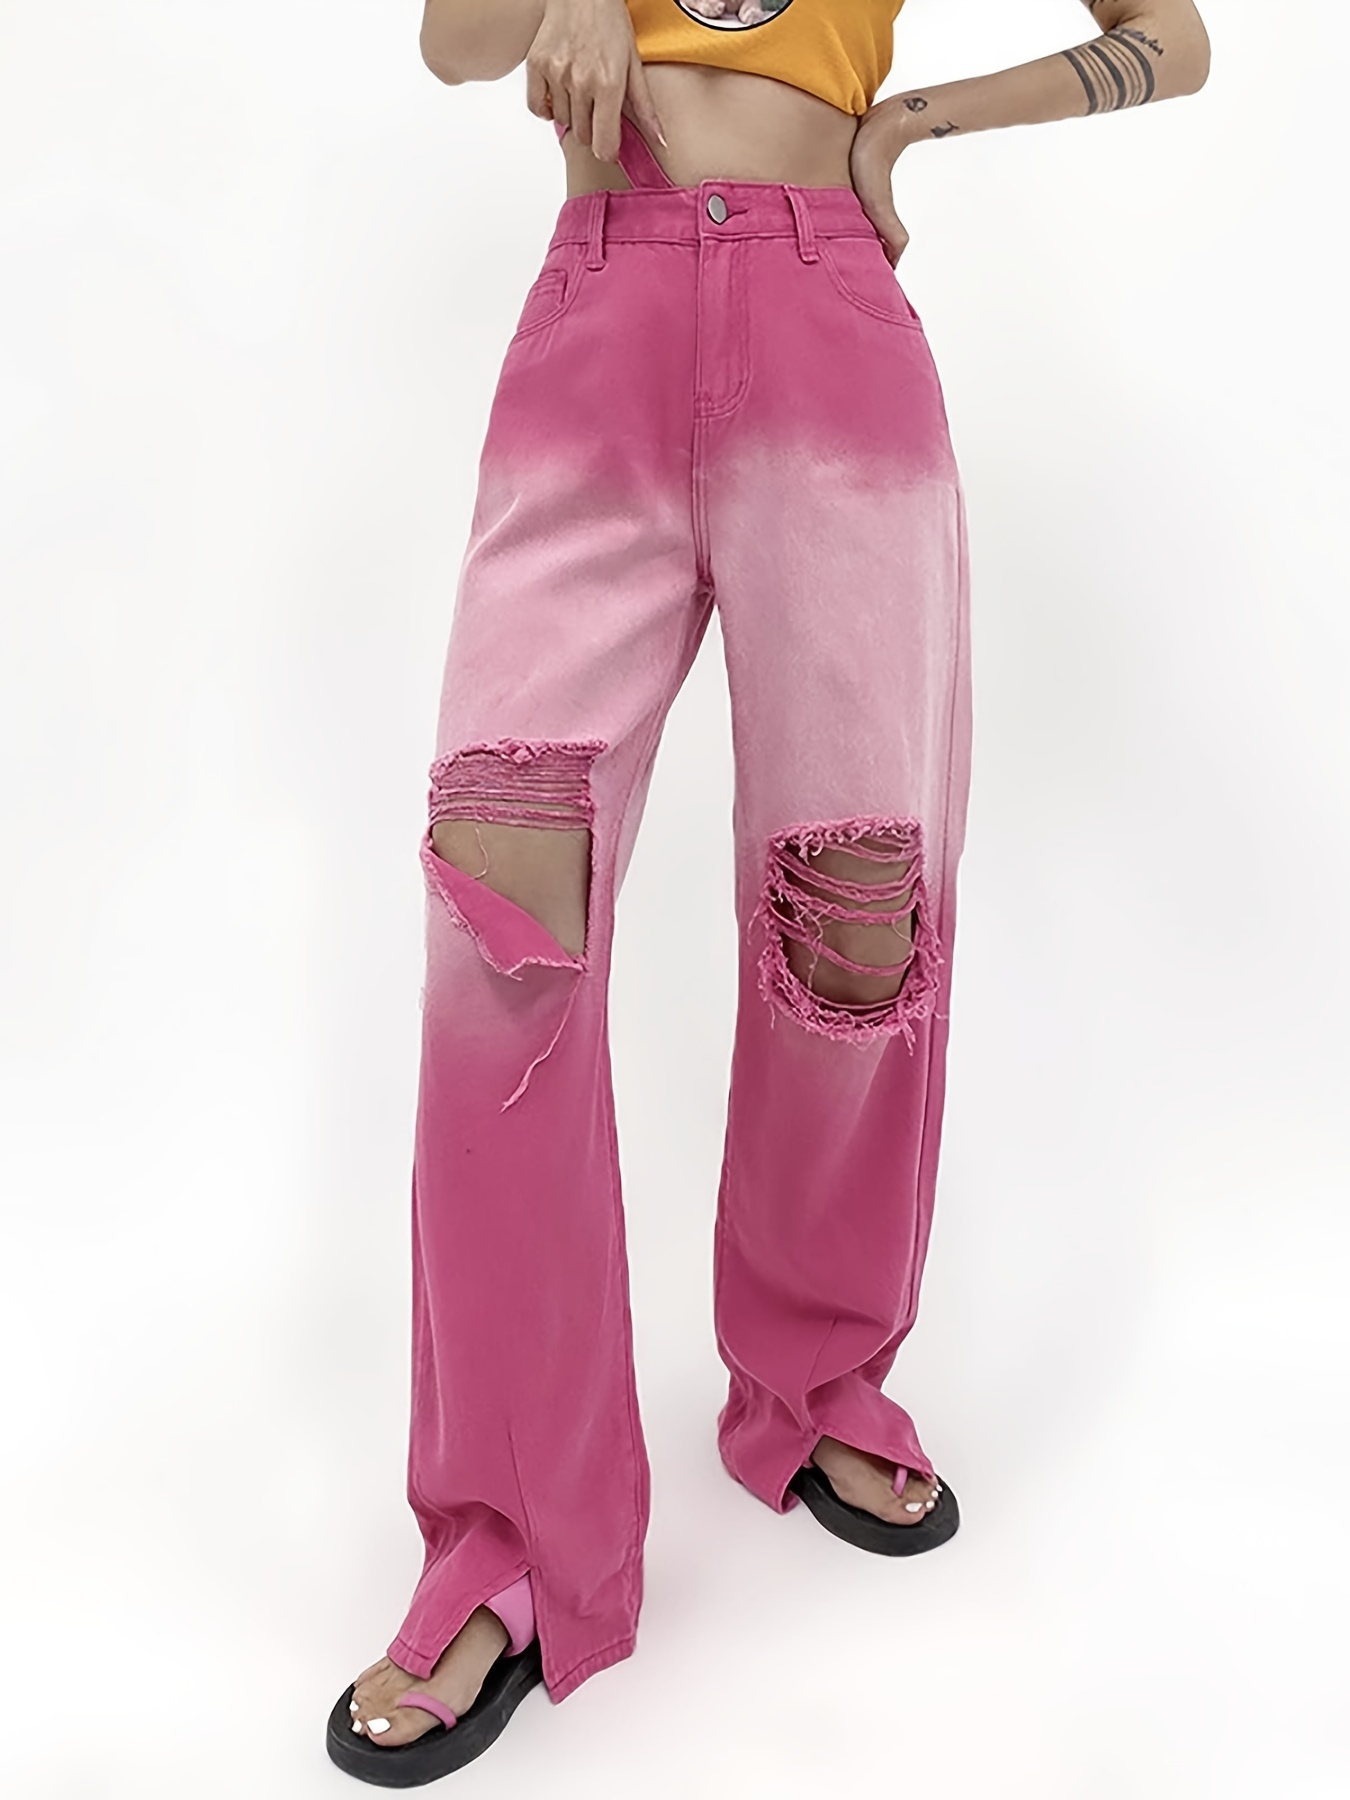 Pink jeans damage loose pants